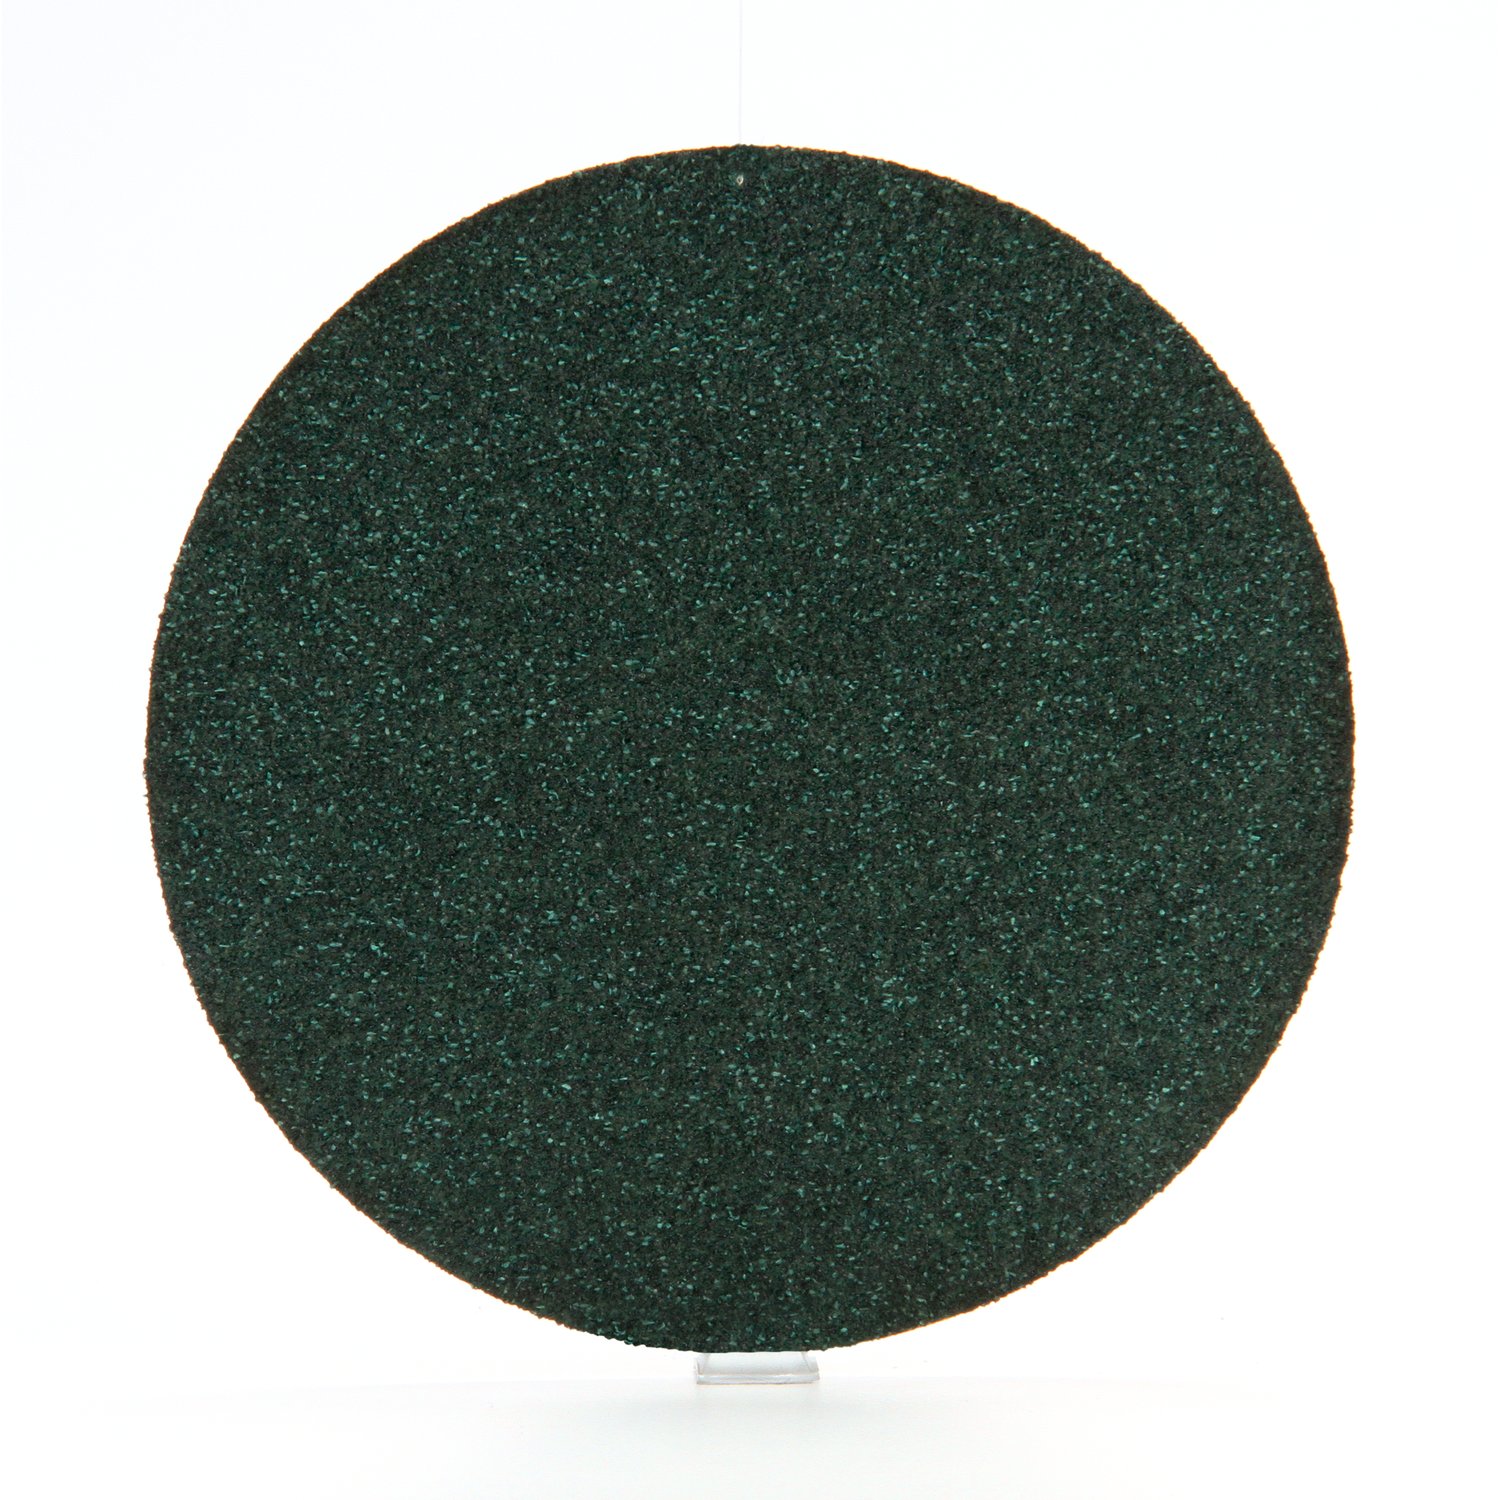 7100192890 - 3M Green Corps Hookit Paper Abrasive Disc, 35435, 36 Grit, E weight,
7 in x 3/8 in, 50 discs per carton, 5 cartons per case